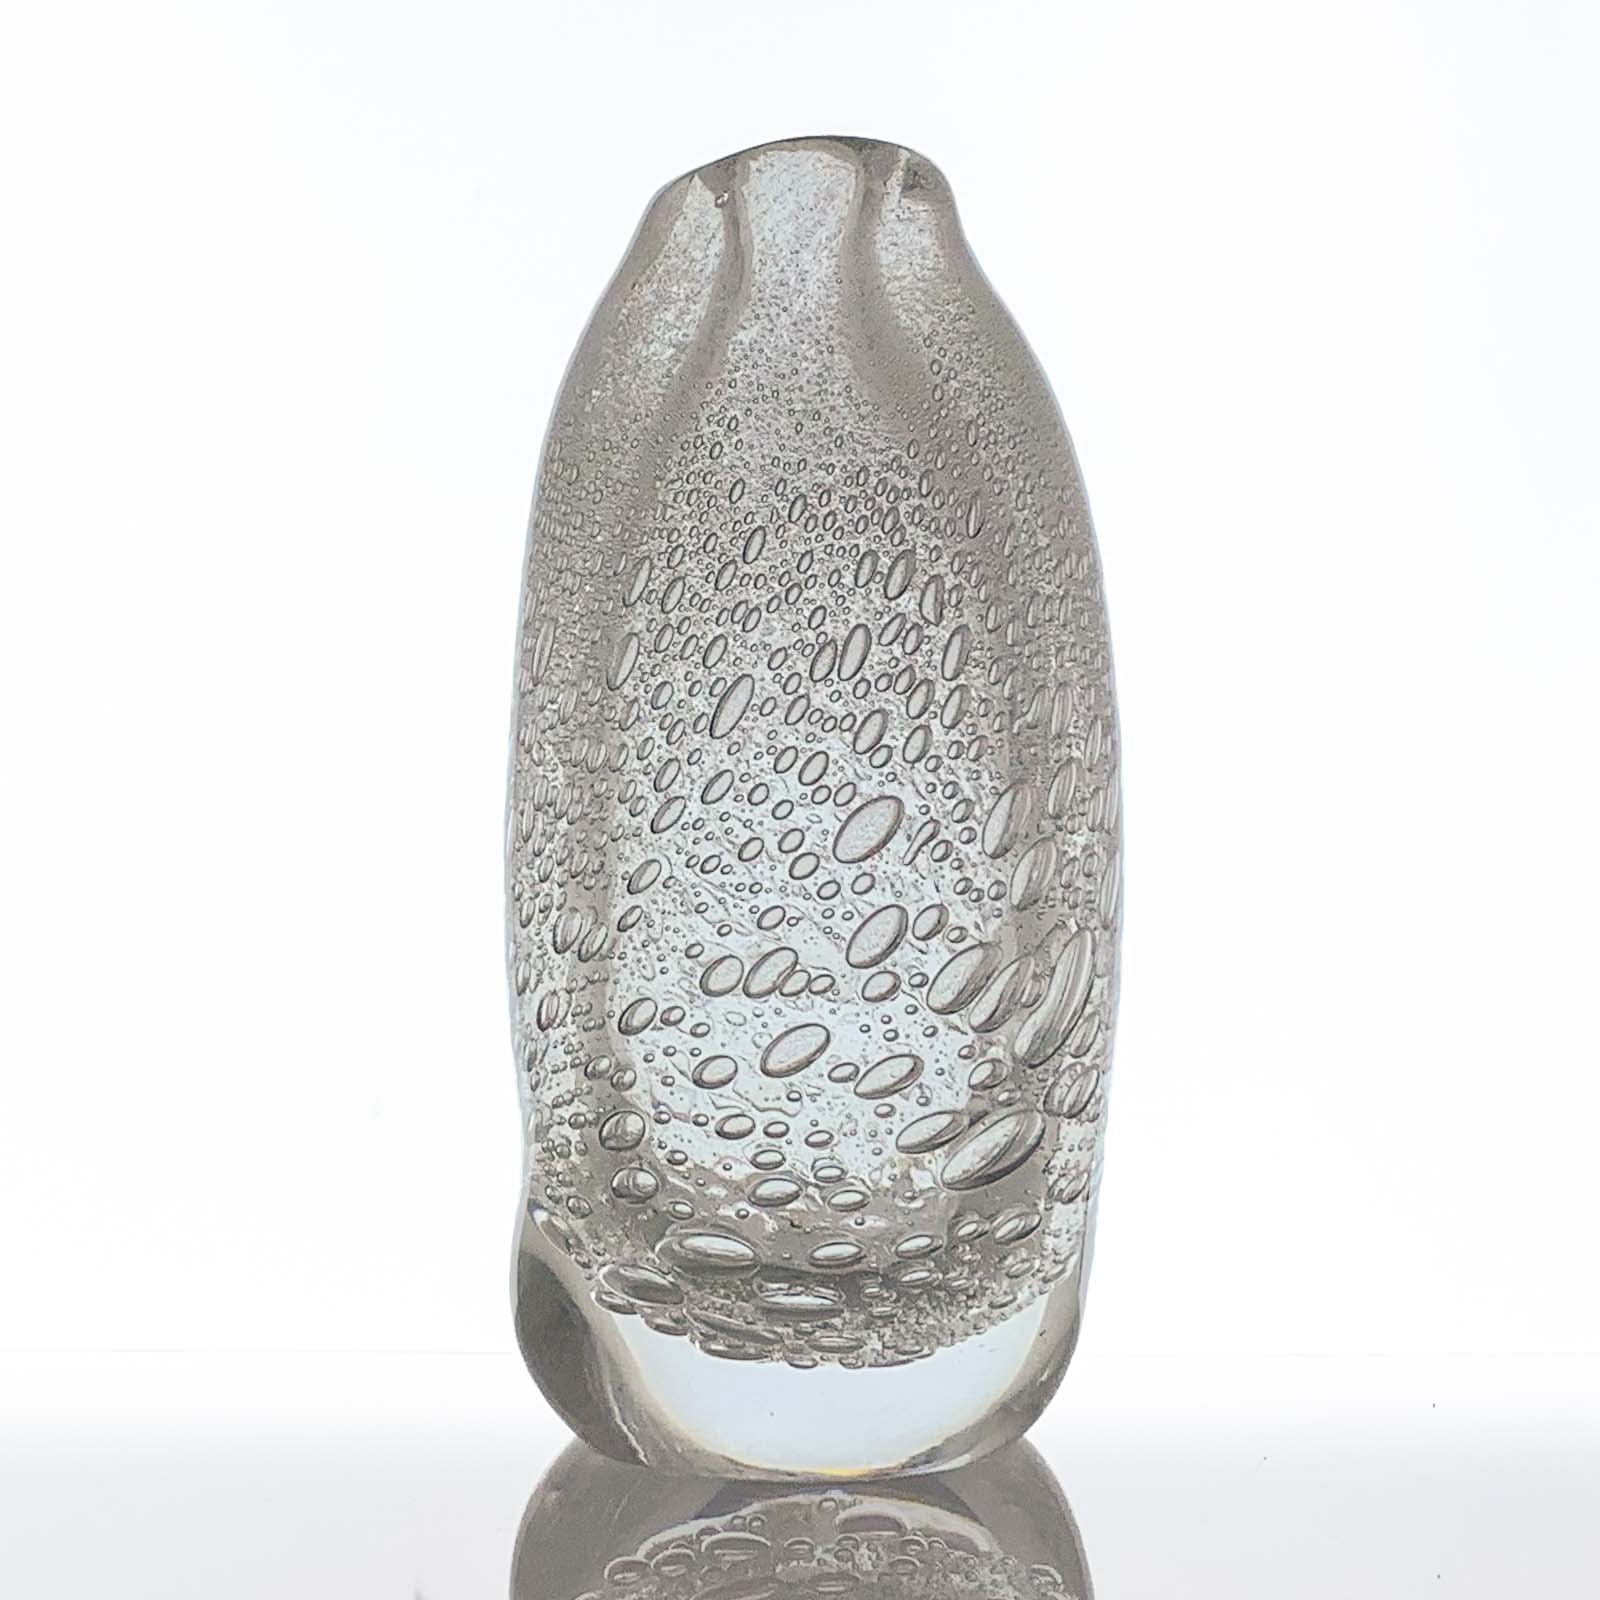 Tapio Wirkkala - Crystal Art-Object with sodium bubbles, model 3234 - Iittala, Finland circa 1948